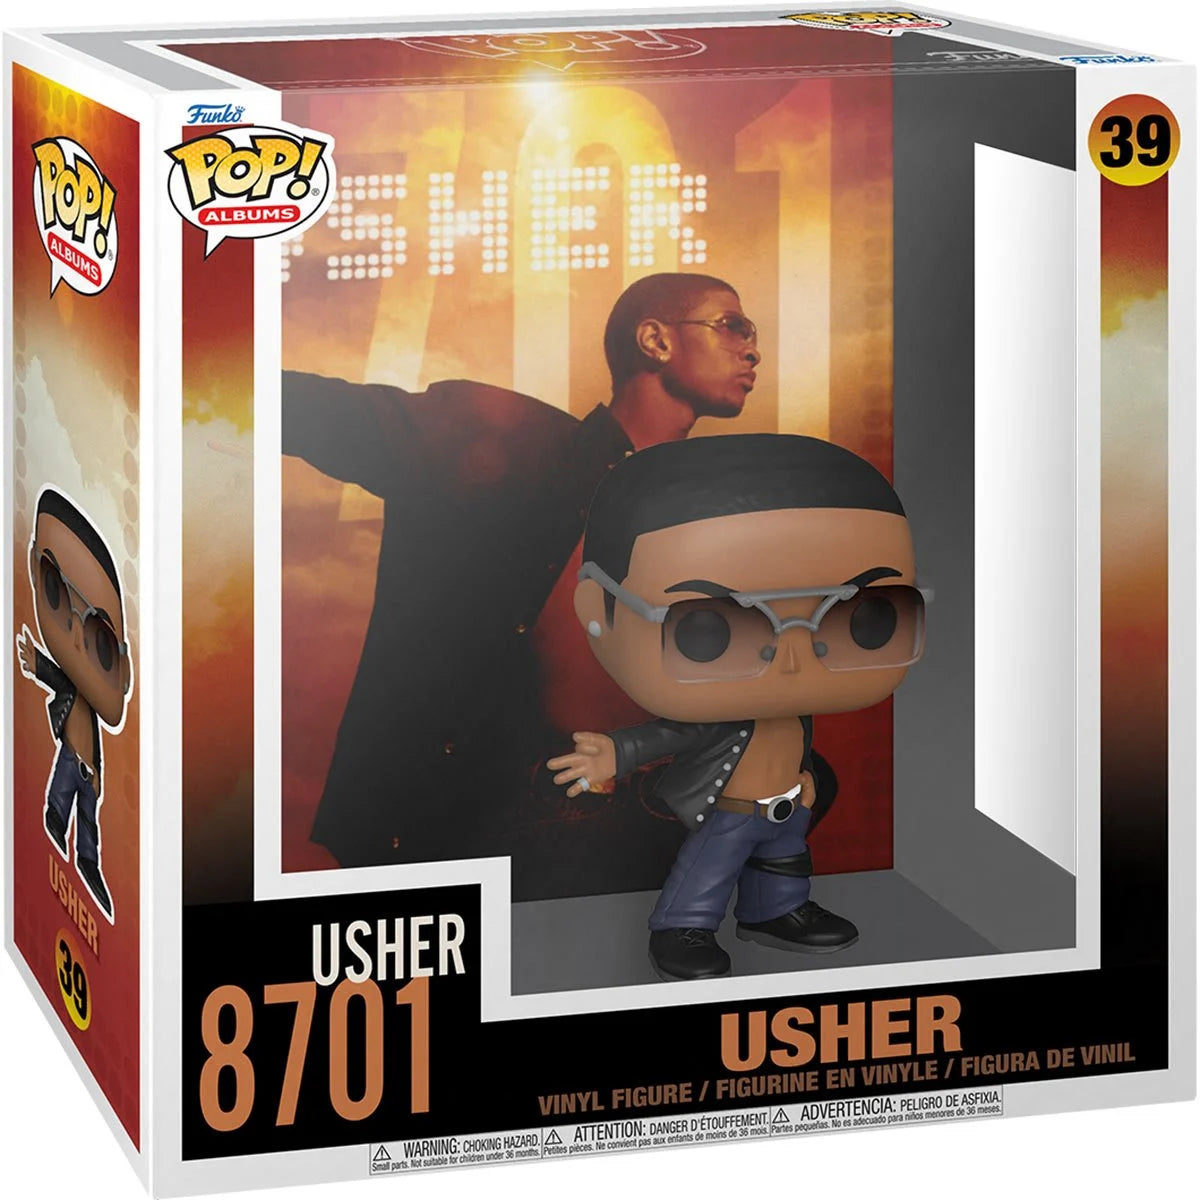 Usher 8701 Pop! Album Figure with Case